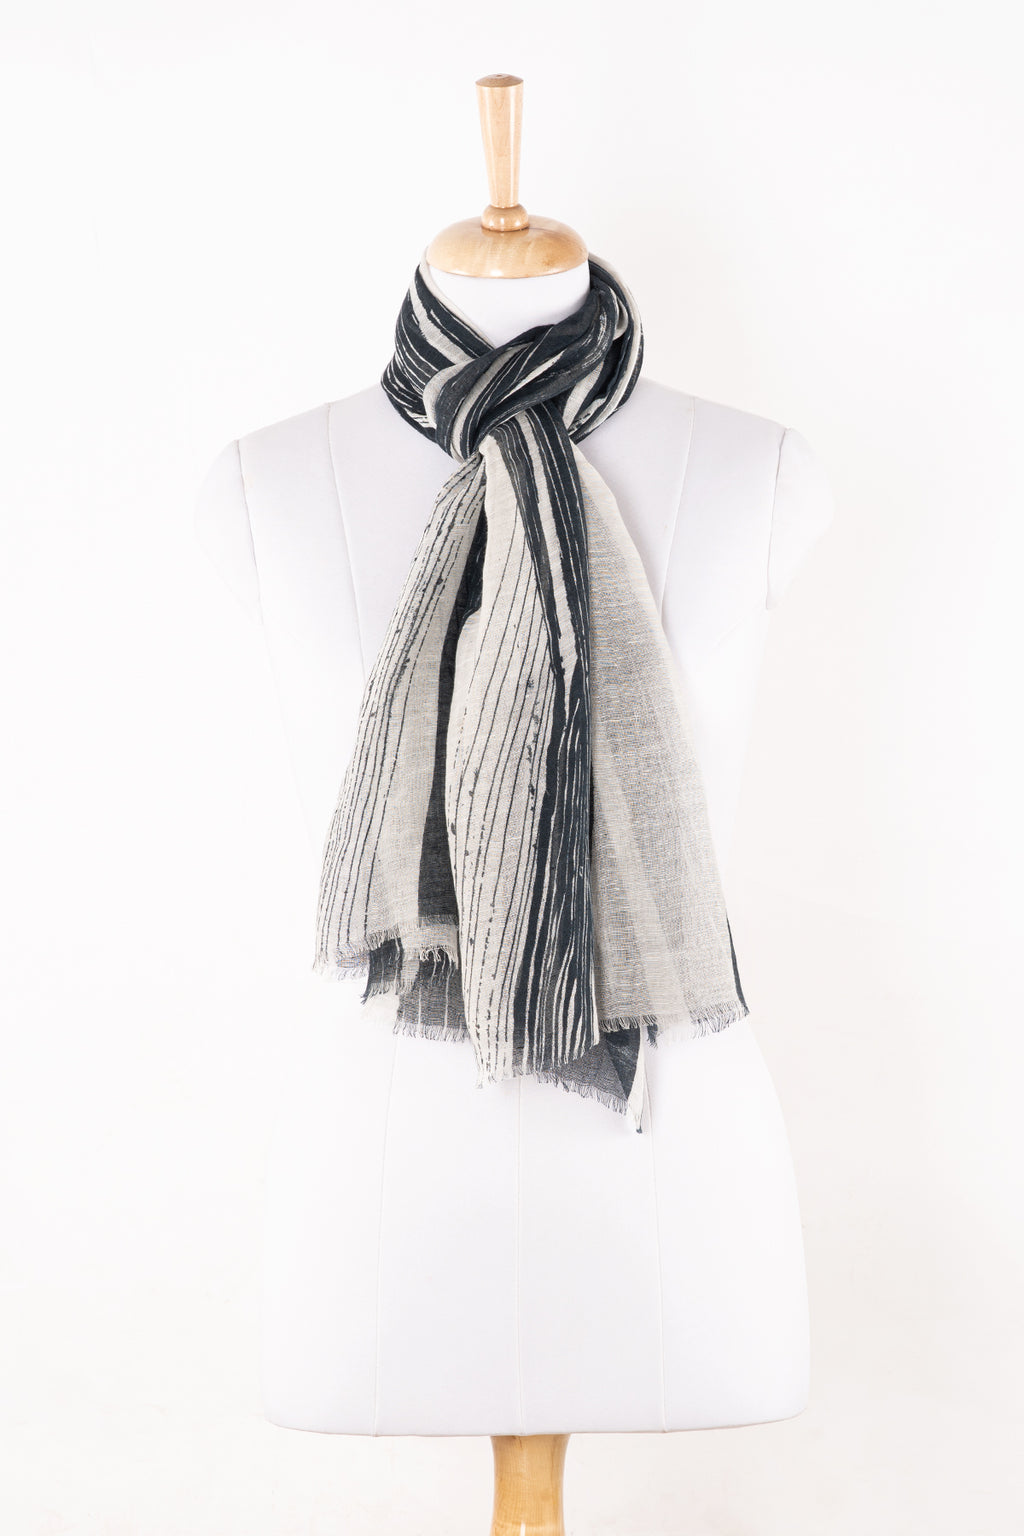 SVEZE Stripy Strokes Print Linen Cotton Scarf - Black and White - Regular Drape